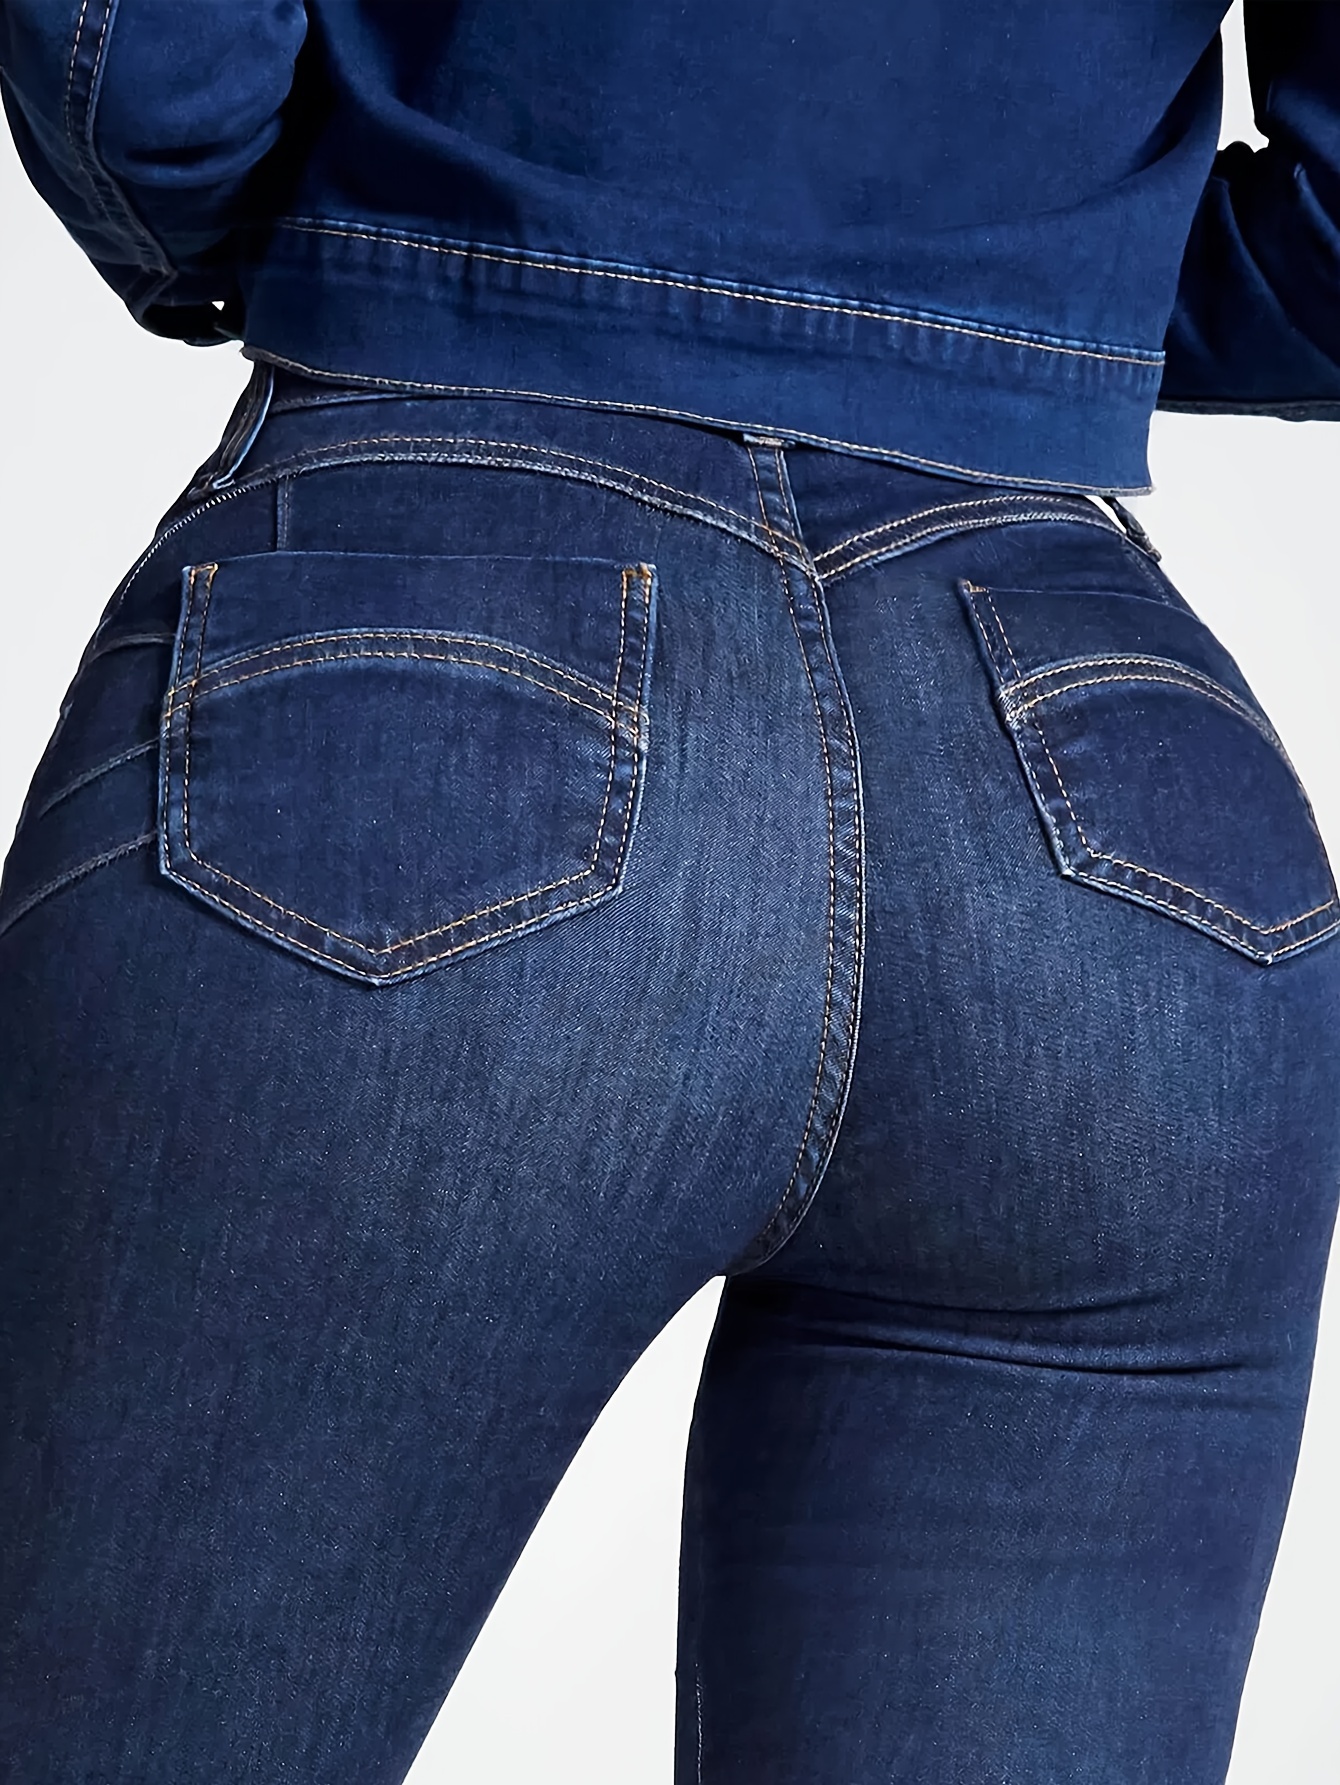  Womens Butt Lifting Jeans For Women Trendy Tummy Control  Jeans Stretch Boot Cut Jeans Denim Pants Deep Blue XL